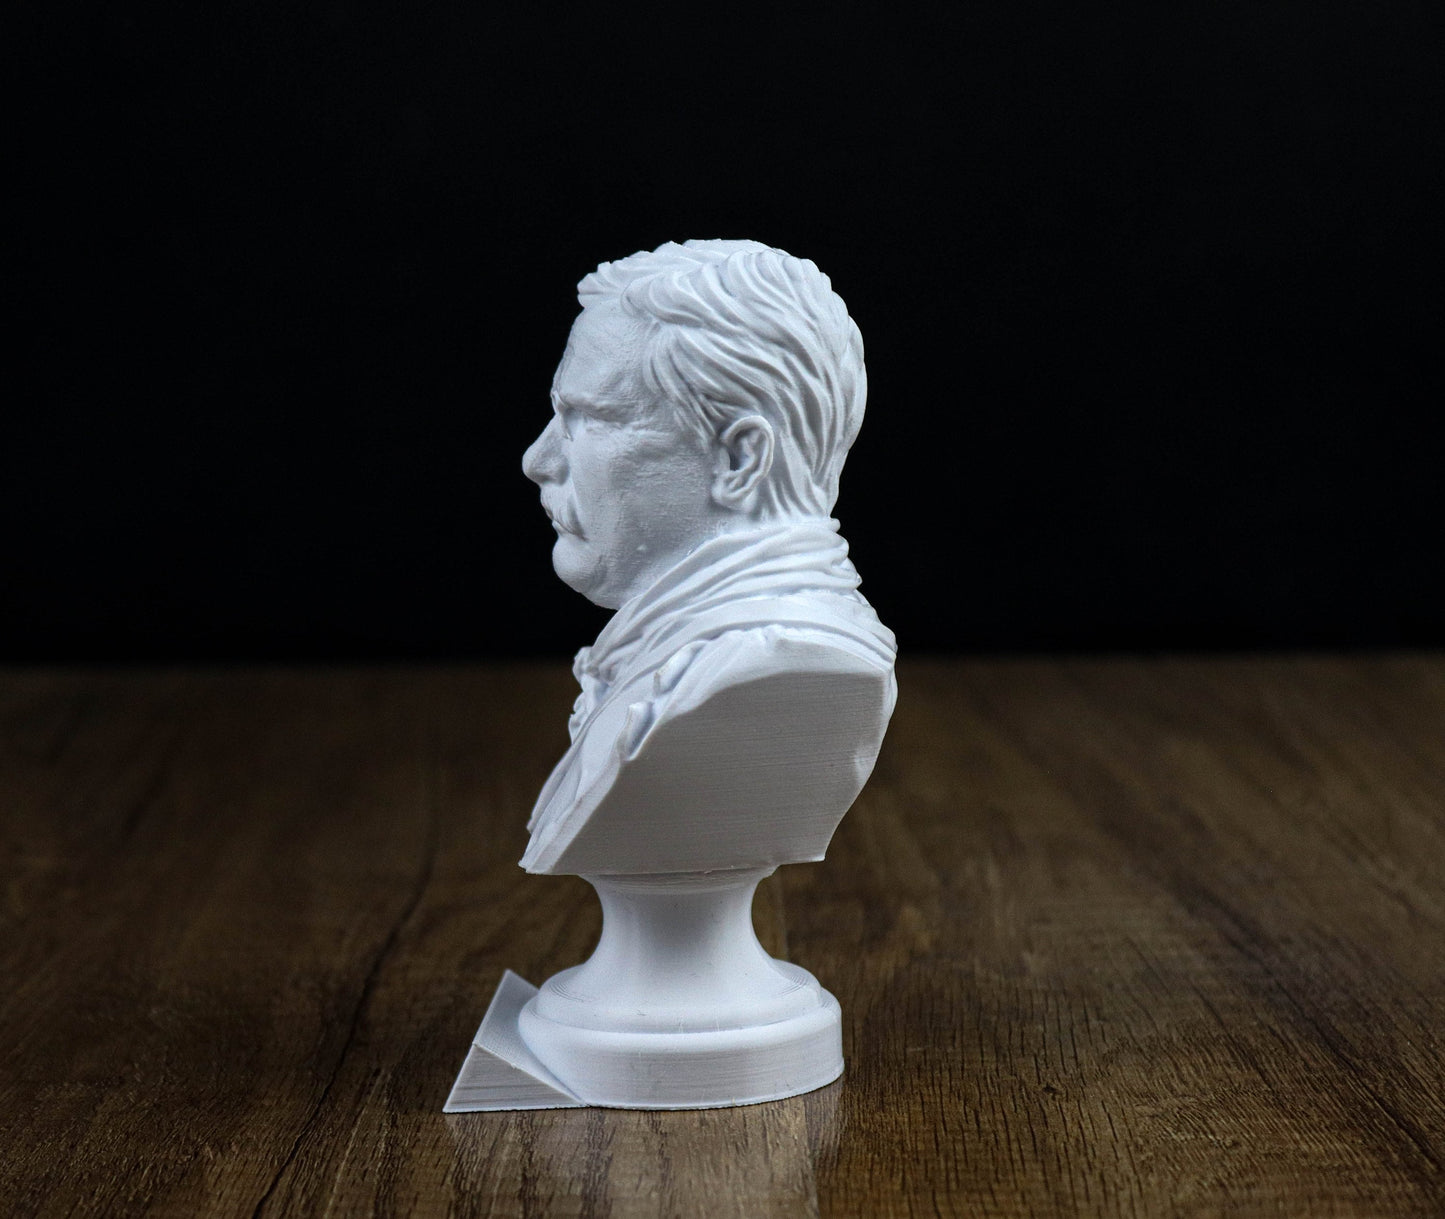 Theodore Roosevelt Bust, 26th U.S. President Sculpture